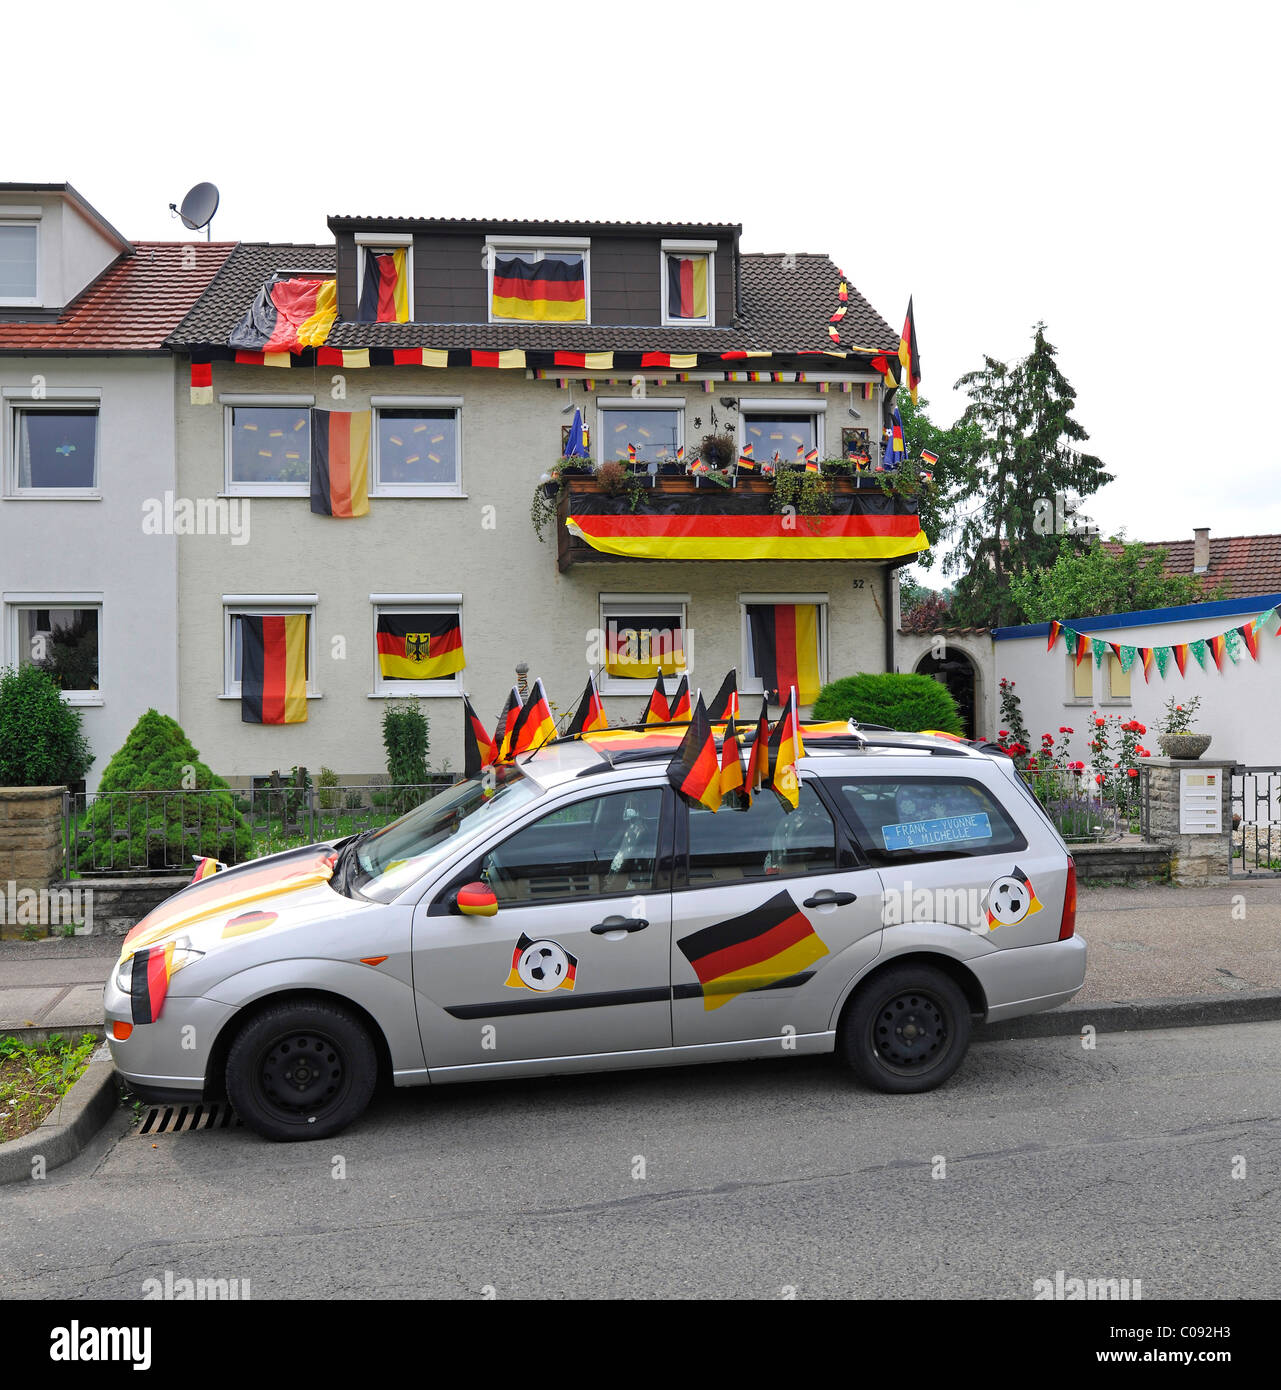 Flags german fans car -Fotos und -Bildmaterial in hoher Auflösung – Alamy